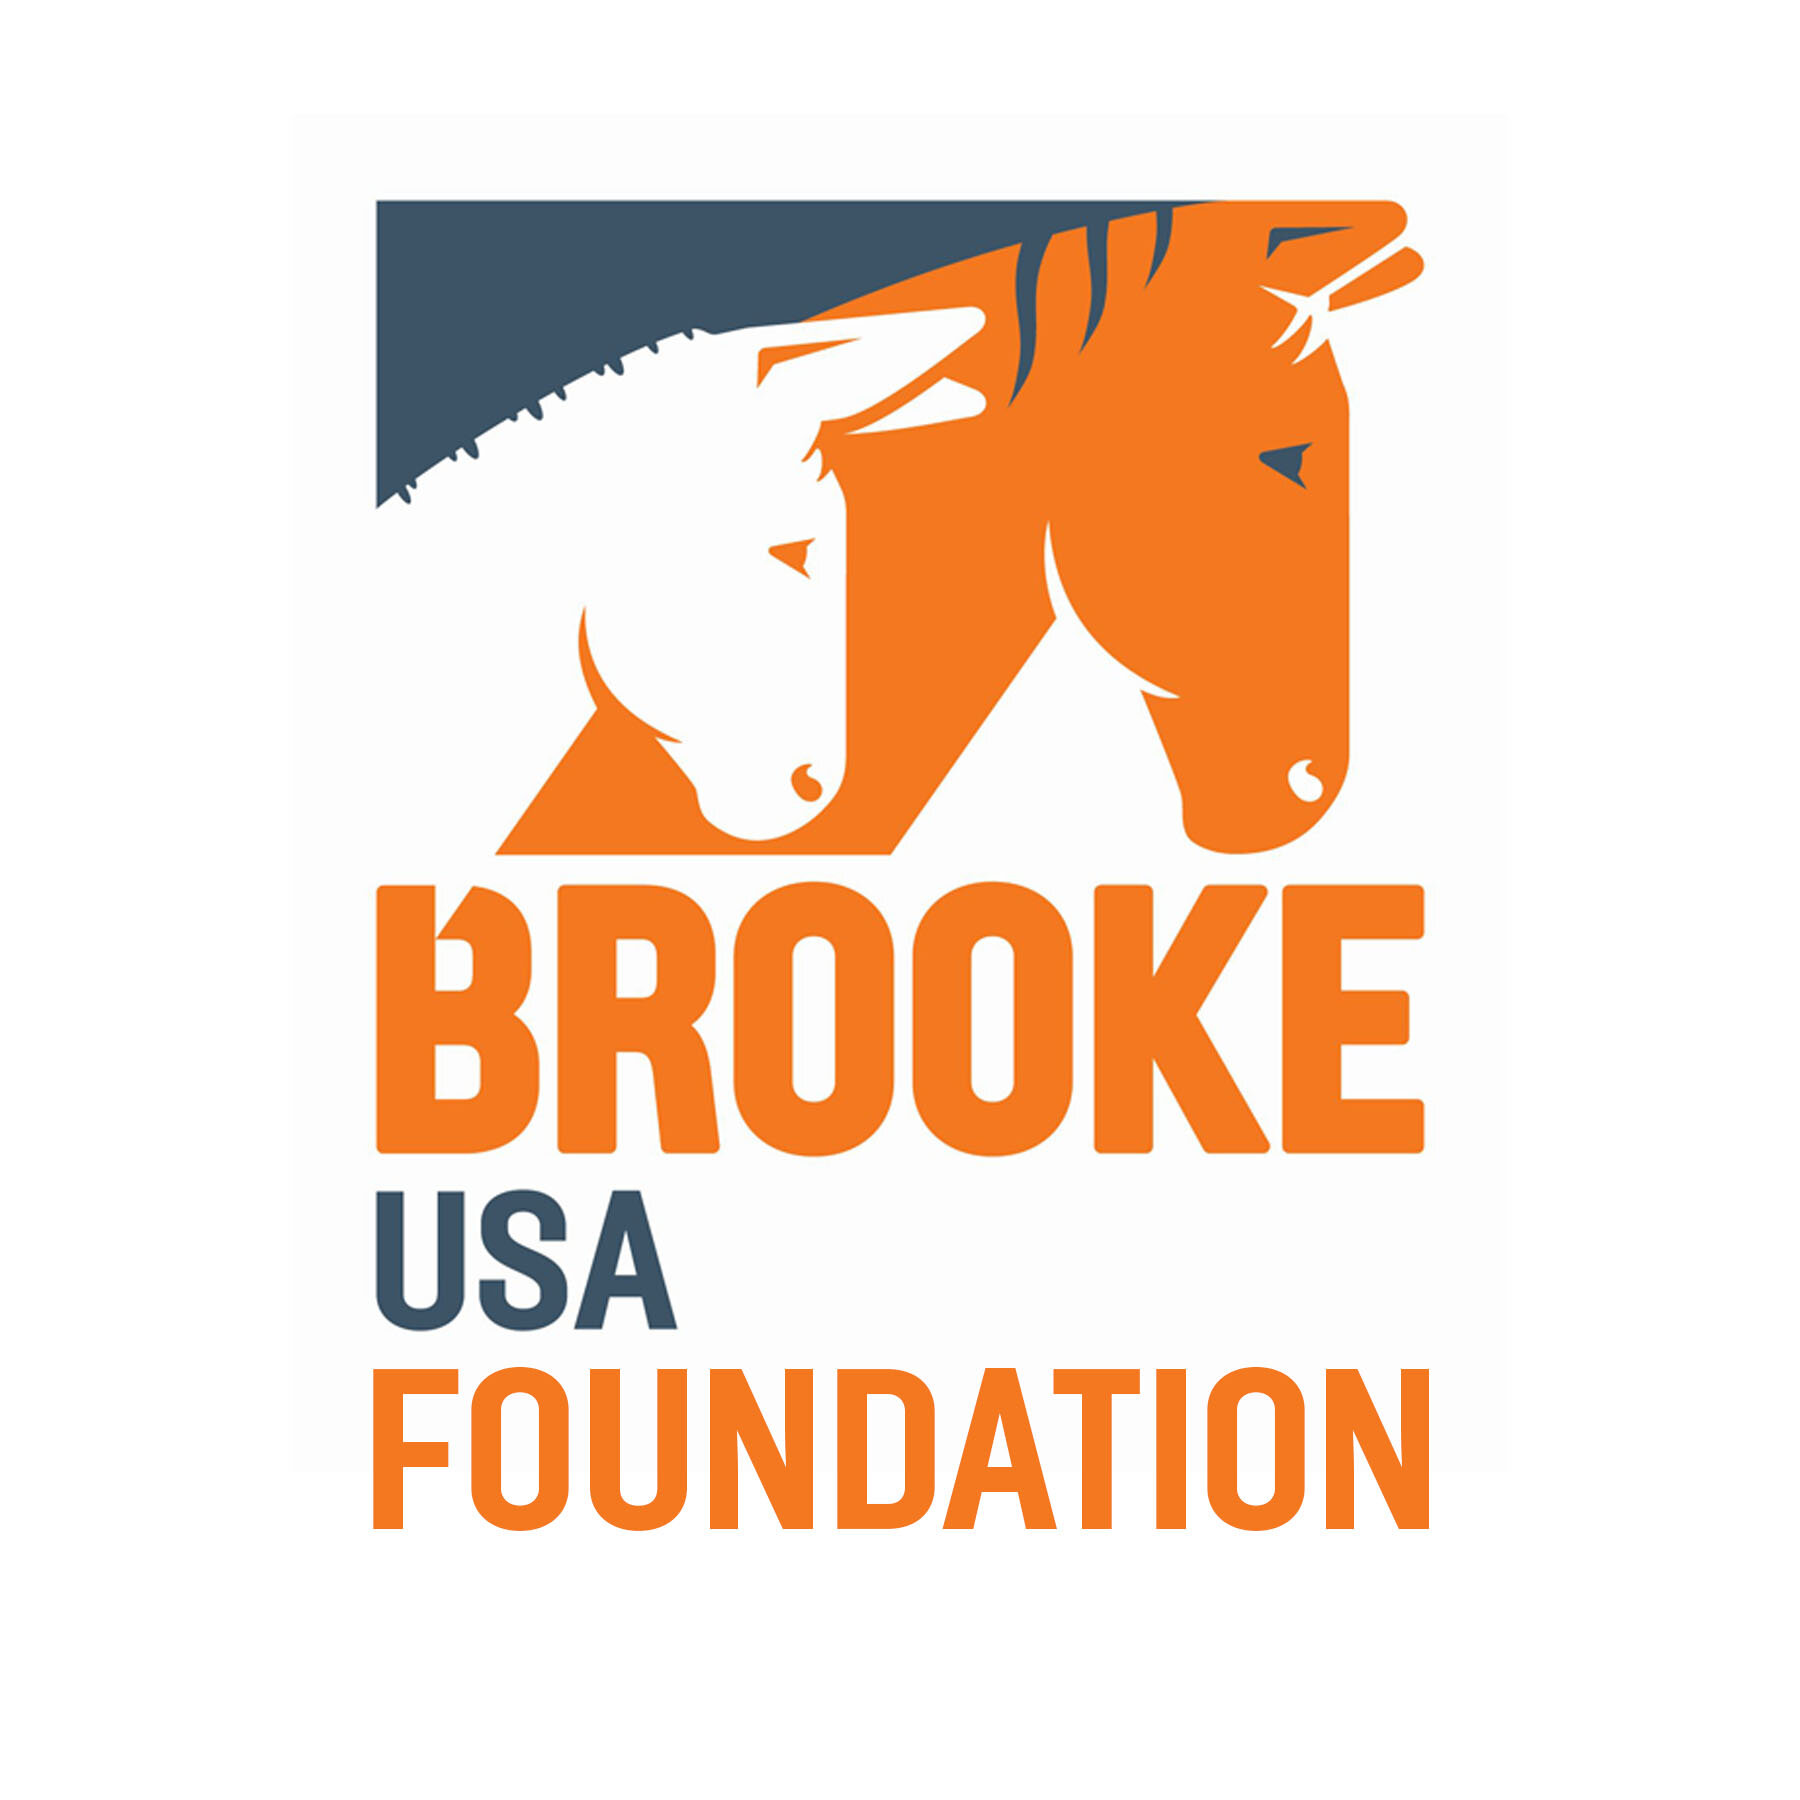 Brooke USA Foundation Logo.jpg